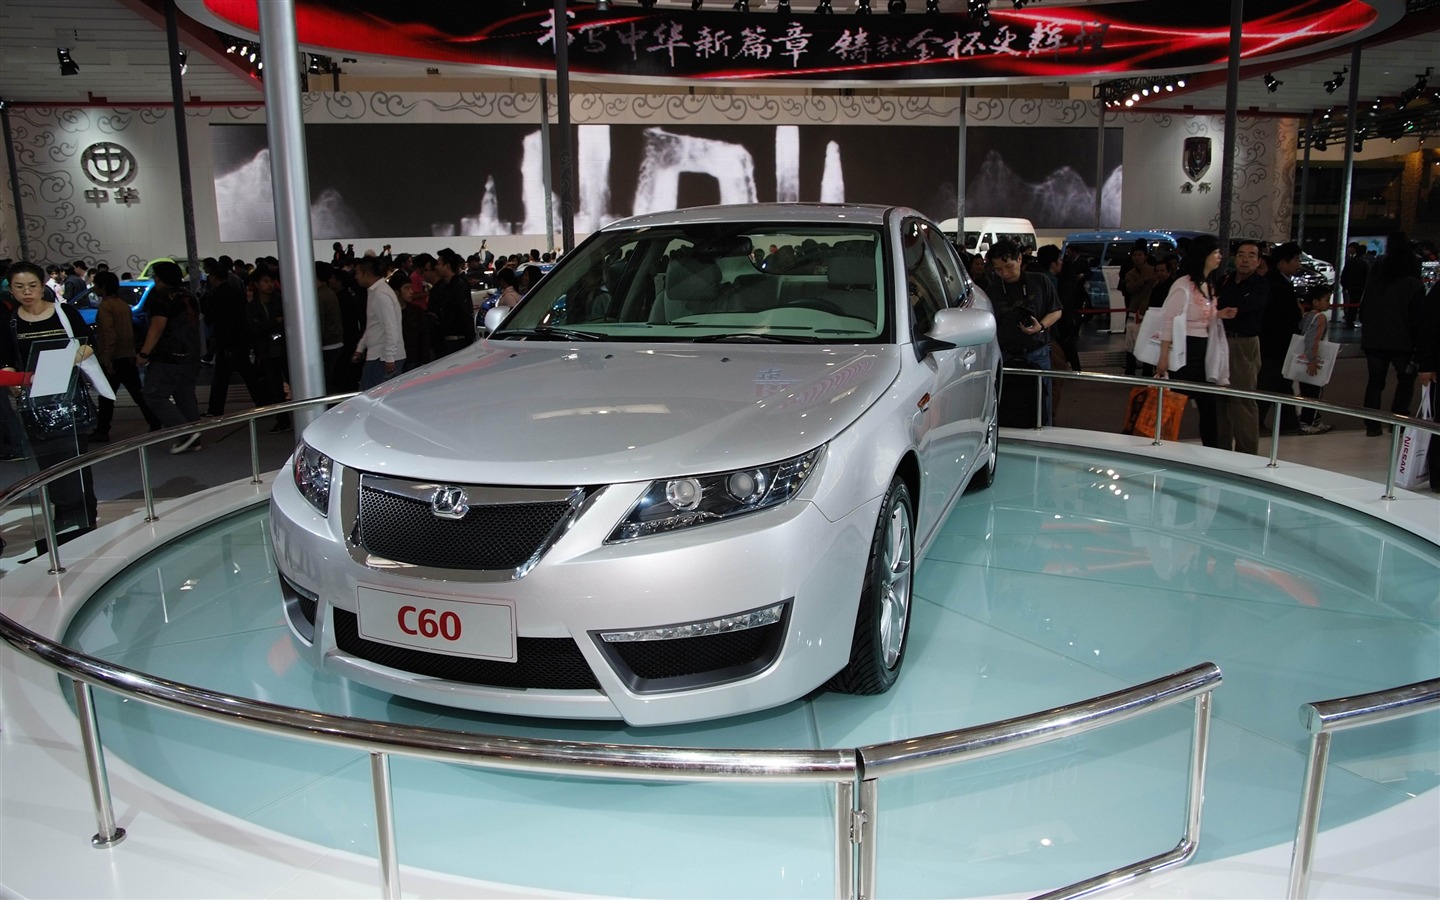 2010 Salón Internacional del Automóvil de Beijing Heung Che (obras barras de refuerzo) #9 - 1440x900